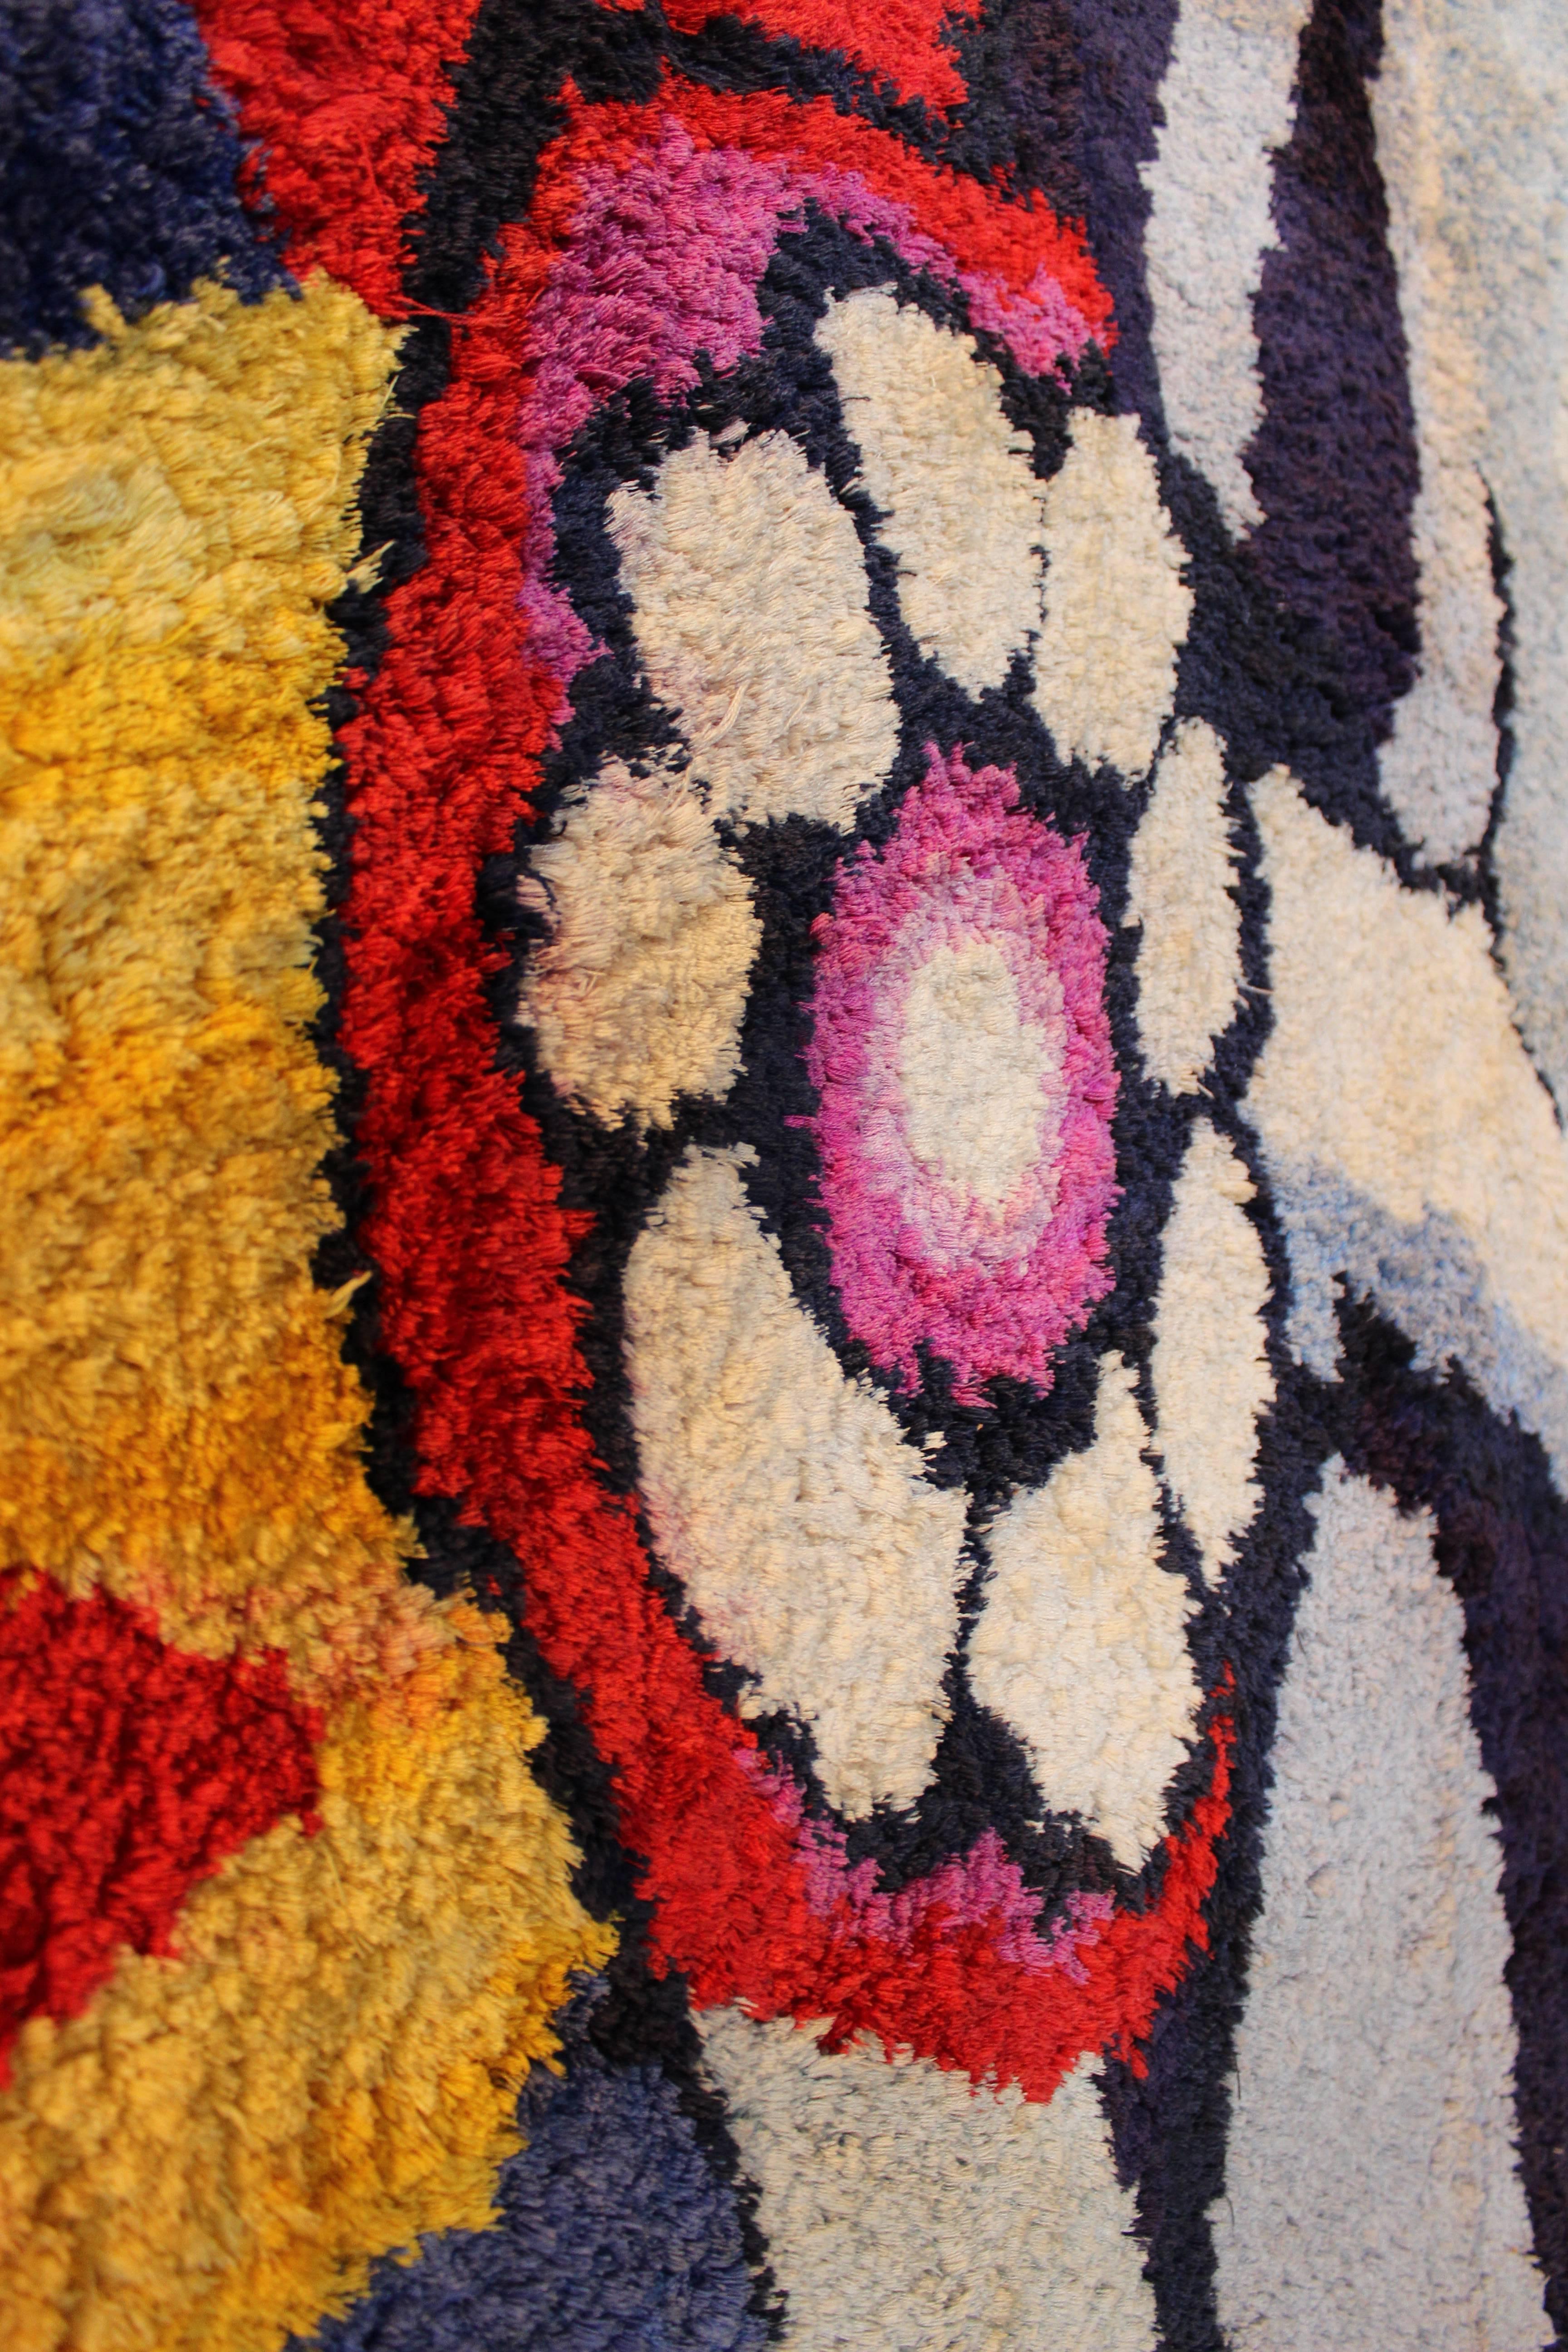 Dutch Monumental Original Fiber Art Karel Appel Rug Silk Tapestry Colorful World